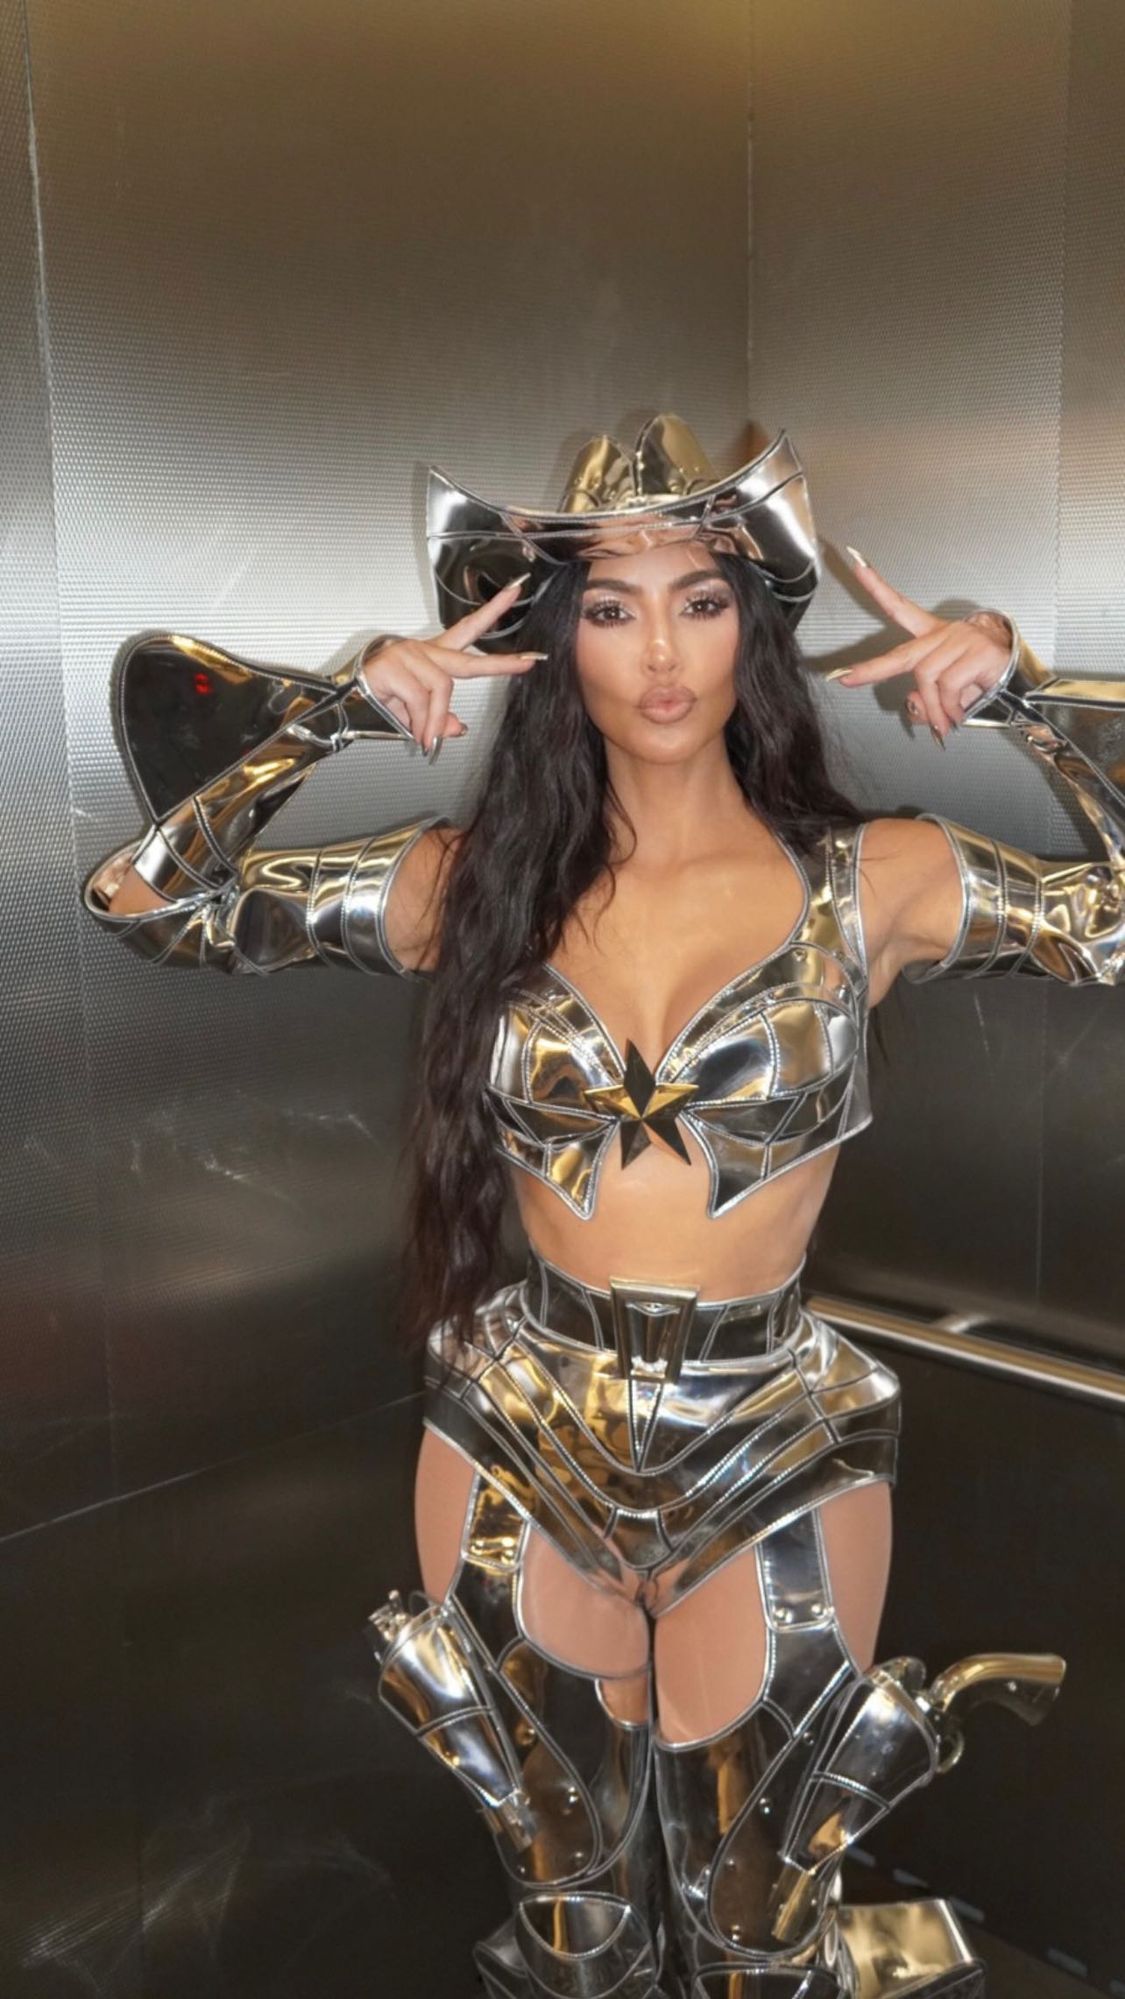 Kim Kardashian Gets Taped Up for Fashion! - Photo 14